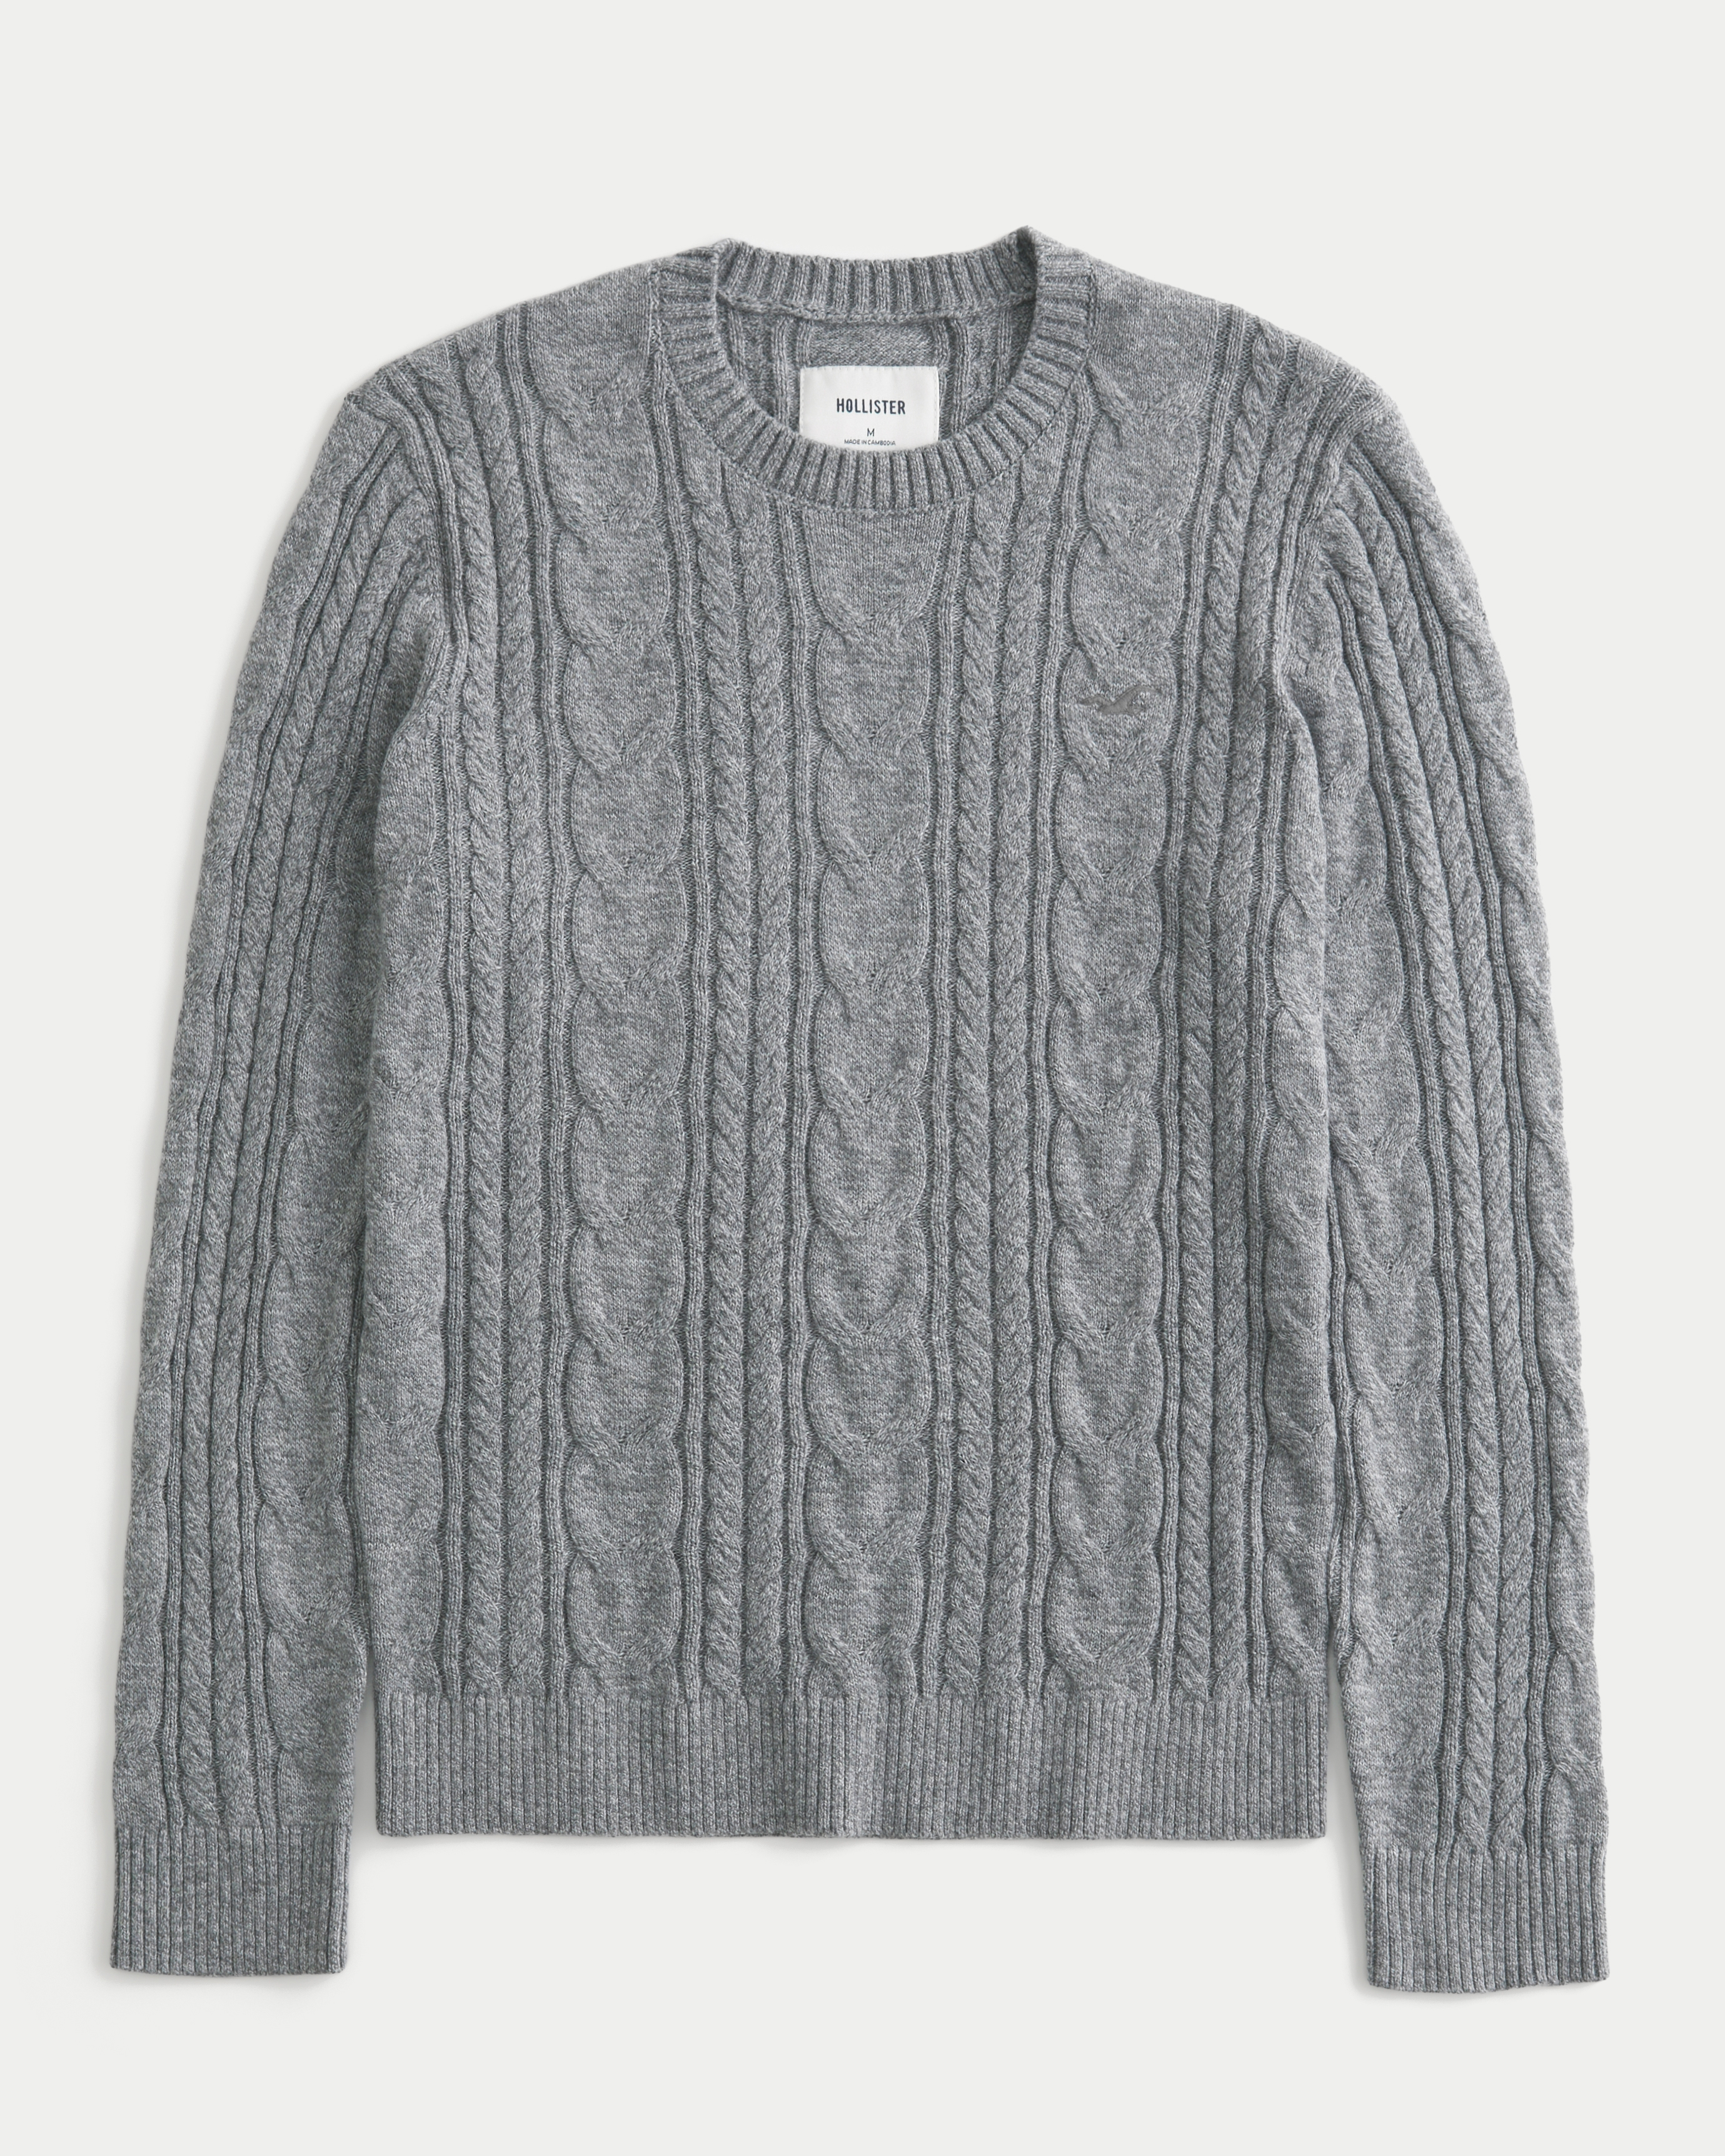 Men's Lightweight Cable-Knit Crew Sweater | Men's Tops 